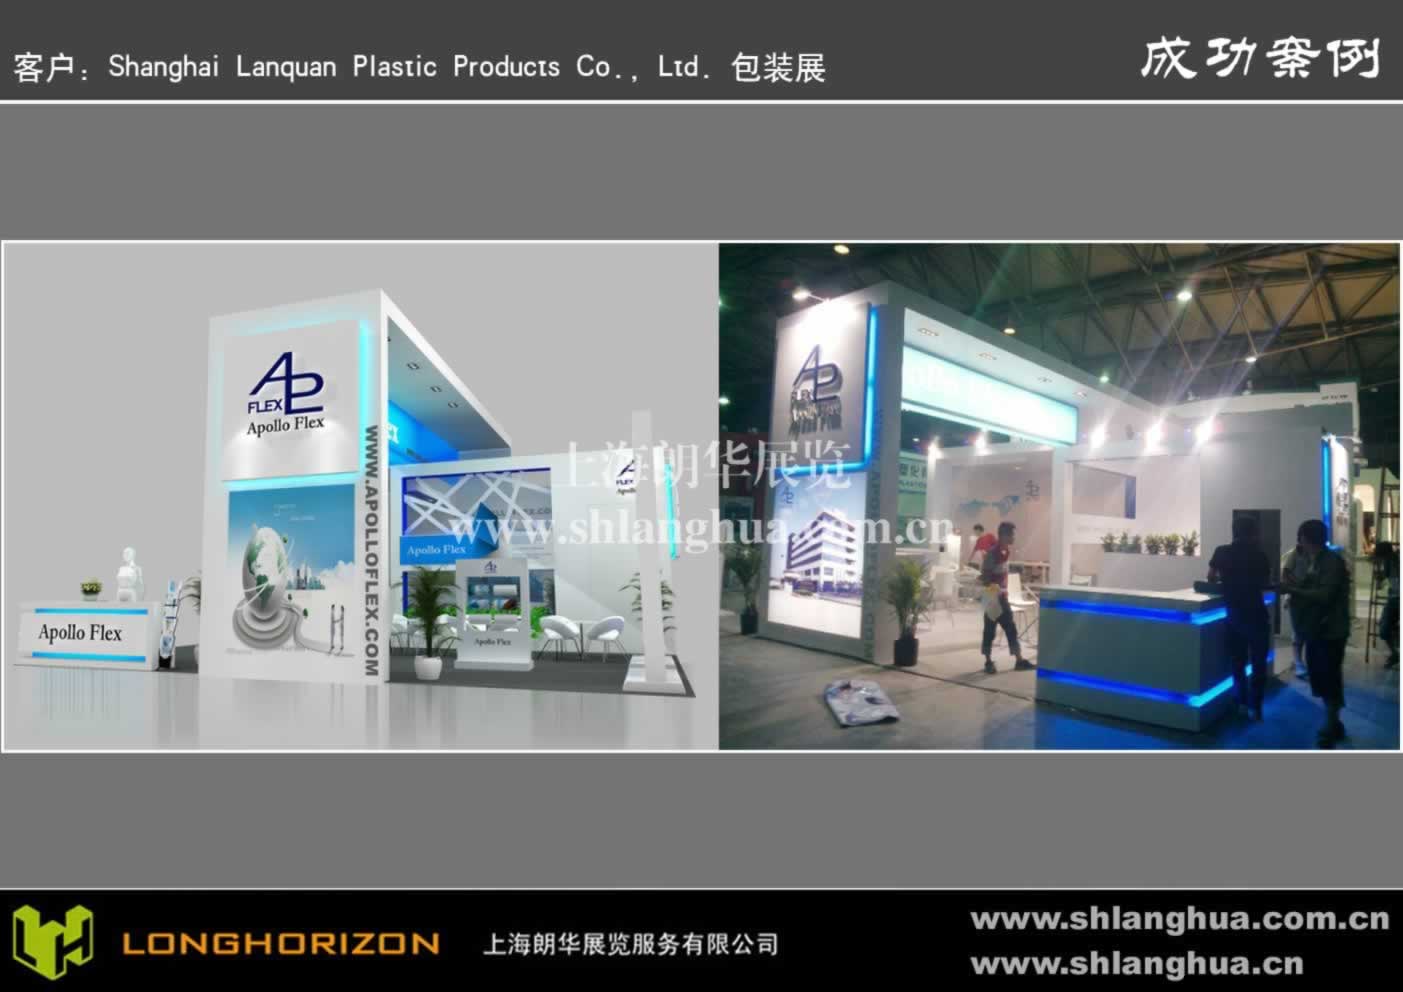 Shanghai Lanquan Plastic Products Co., Ltd 包装展